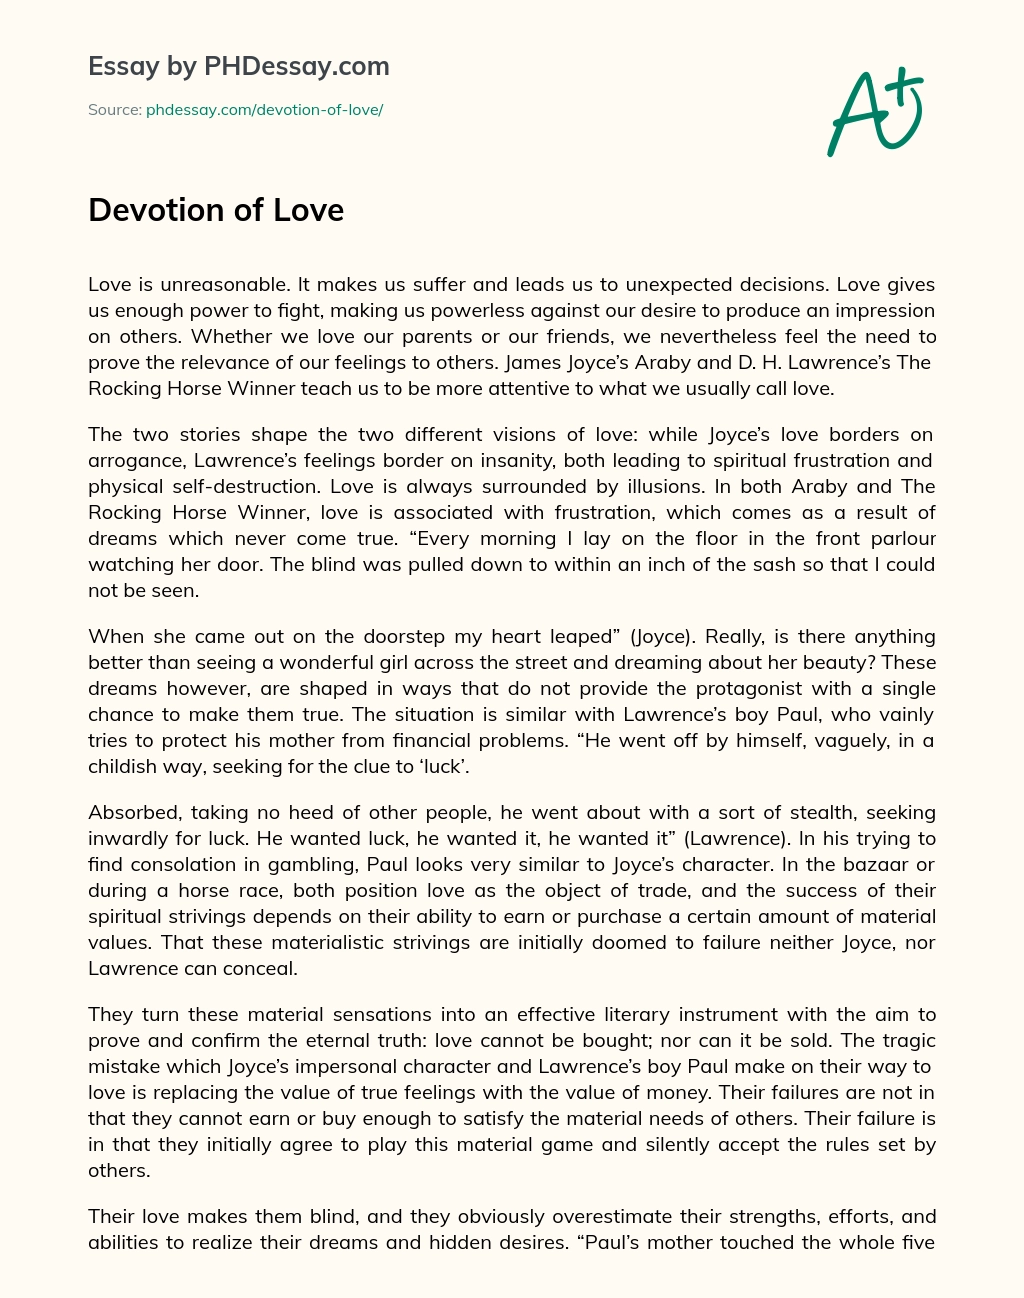 Devotion of Love essay